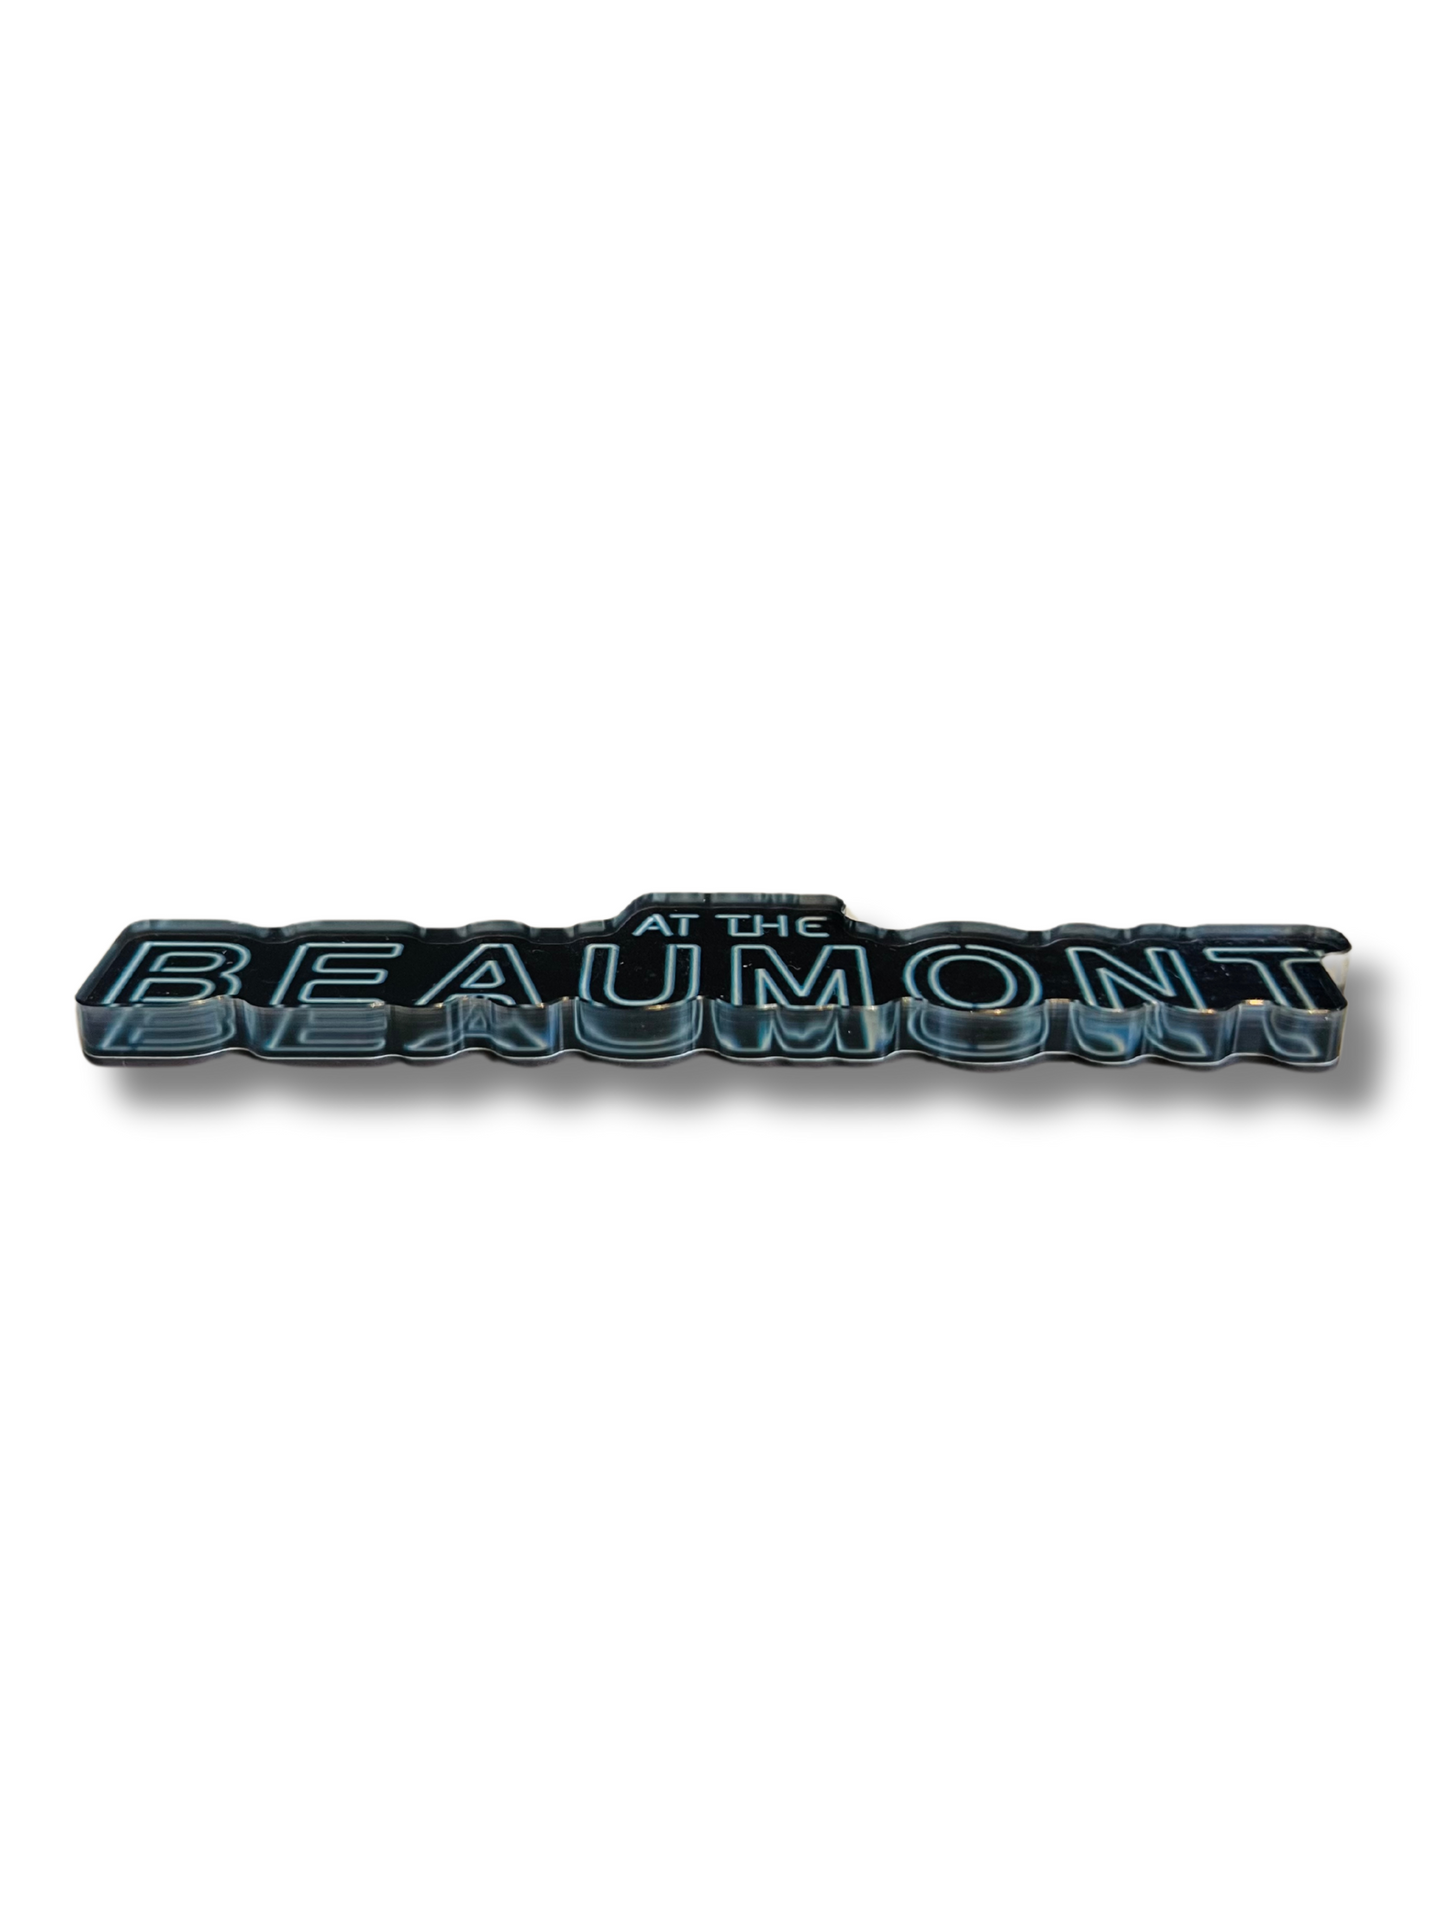 Vivian Beaumont Marquee Acrylic Magnet